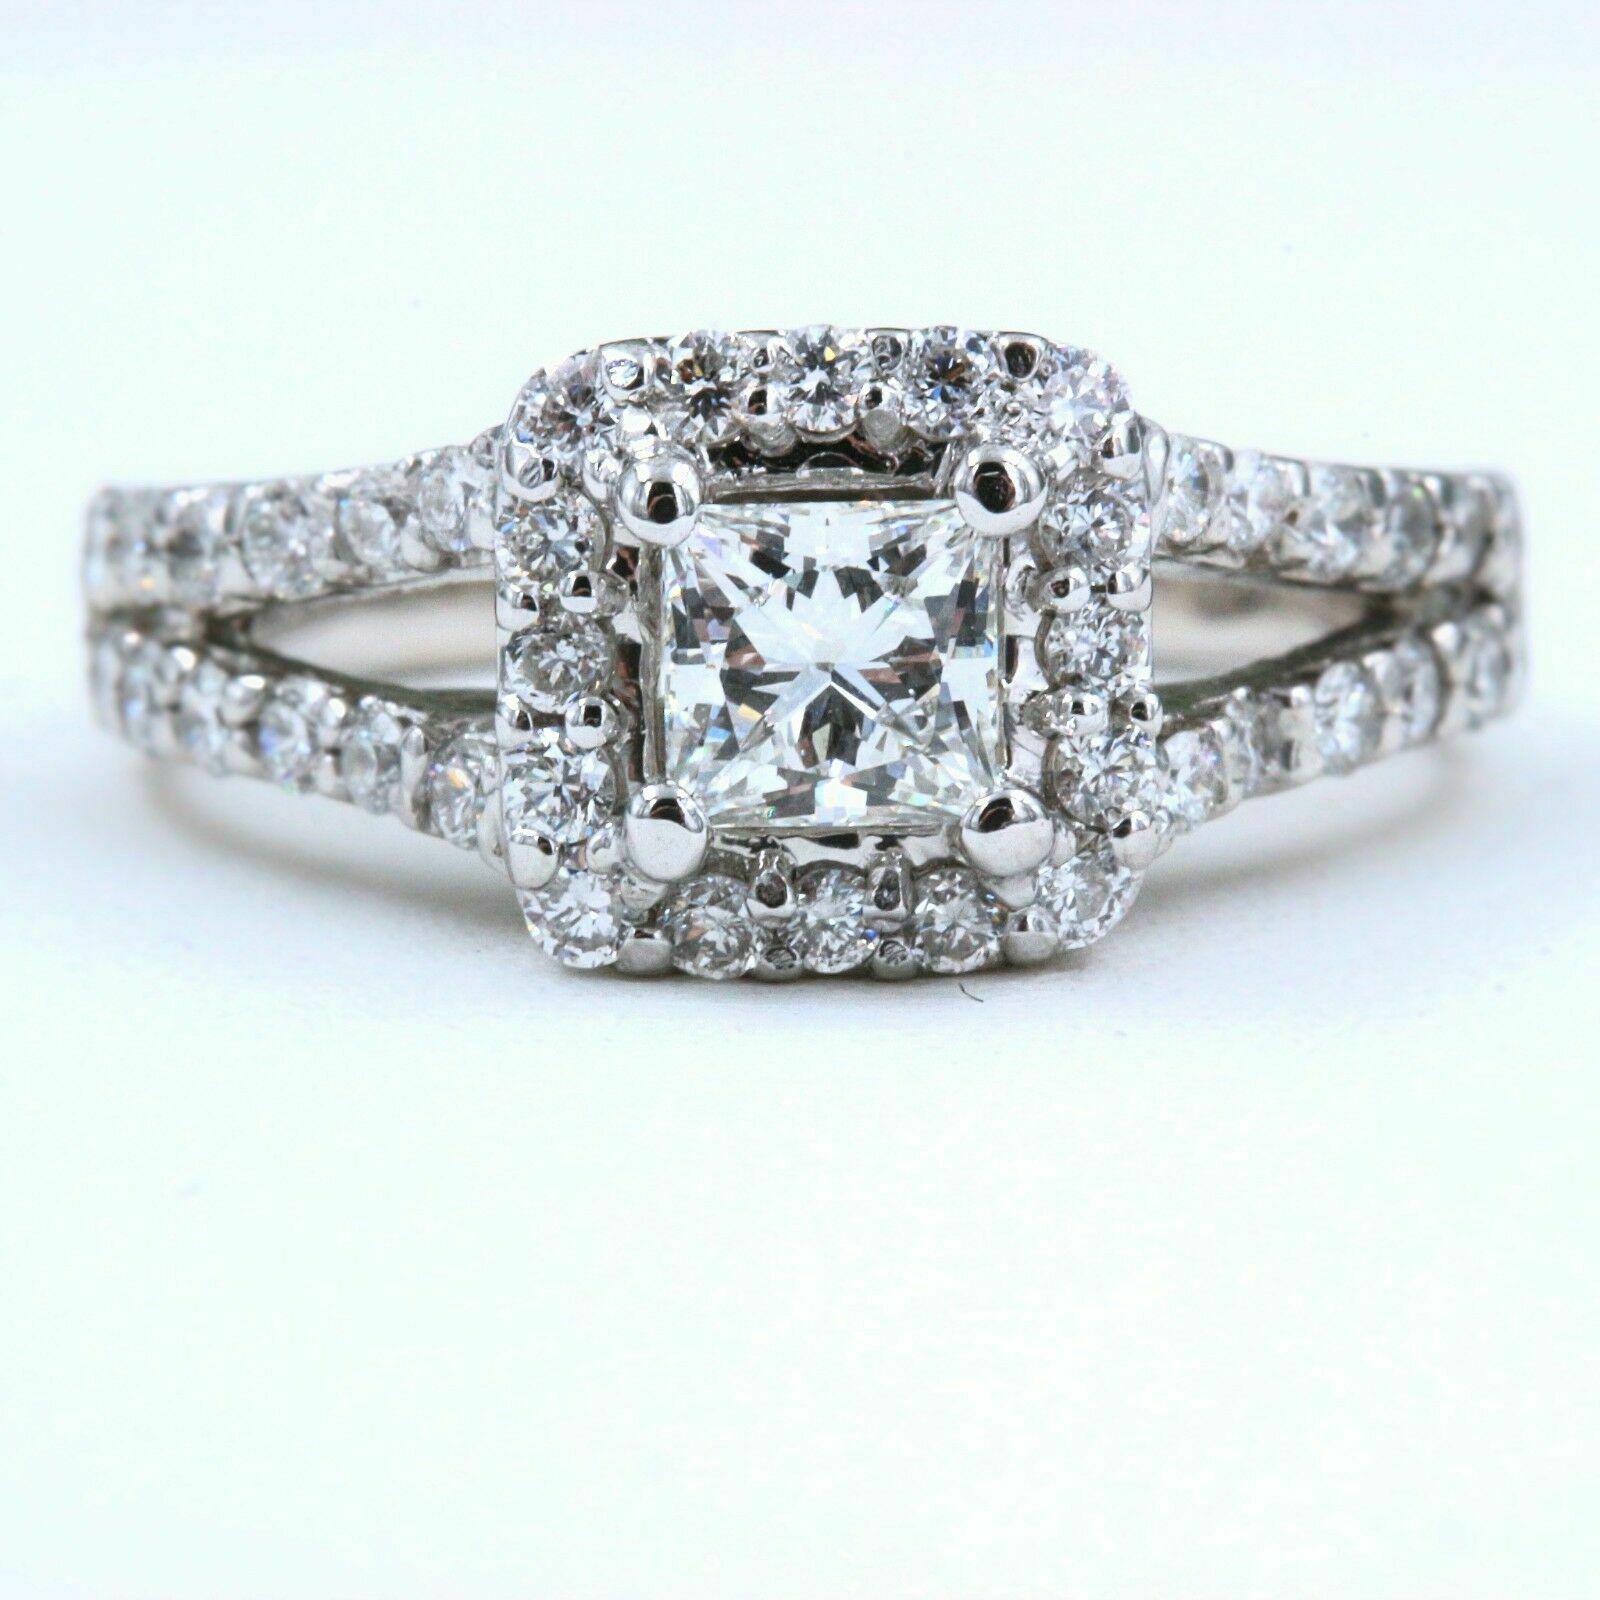 Helzberg Diamonds Diamond Engagement Ring 1.00 tcw 18k White Gold $4,299  Retail | eBay